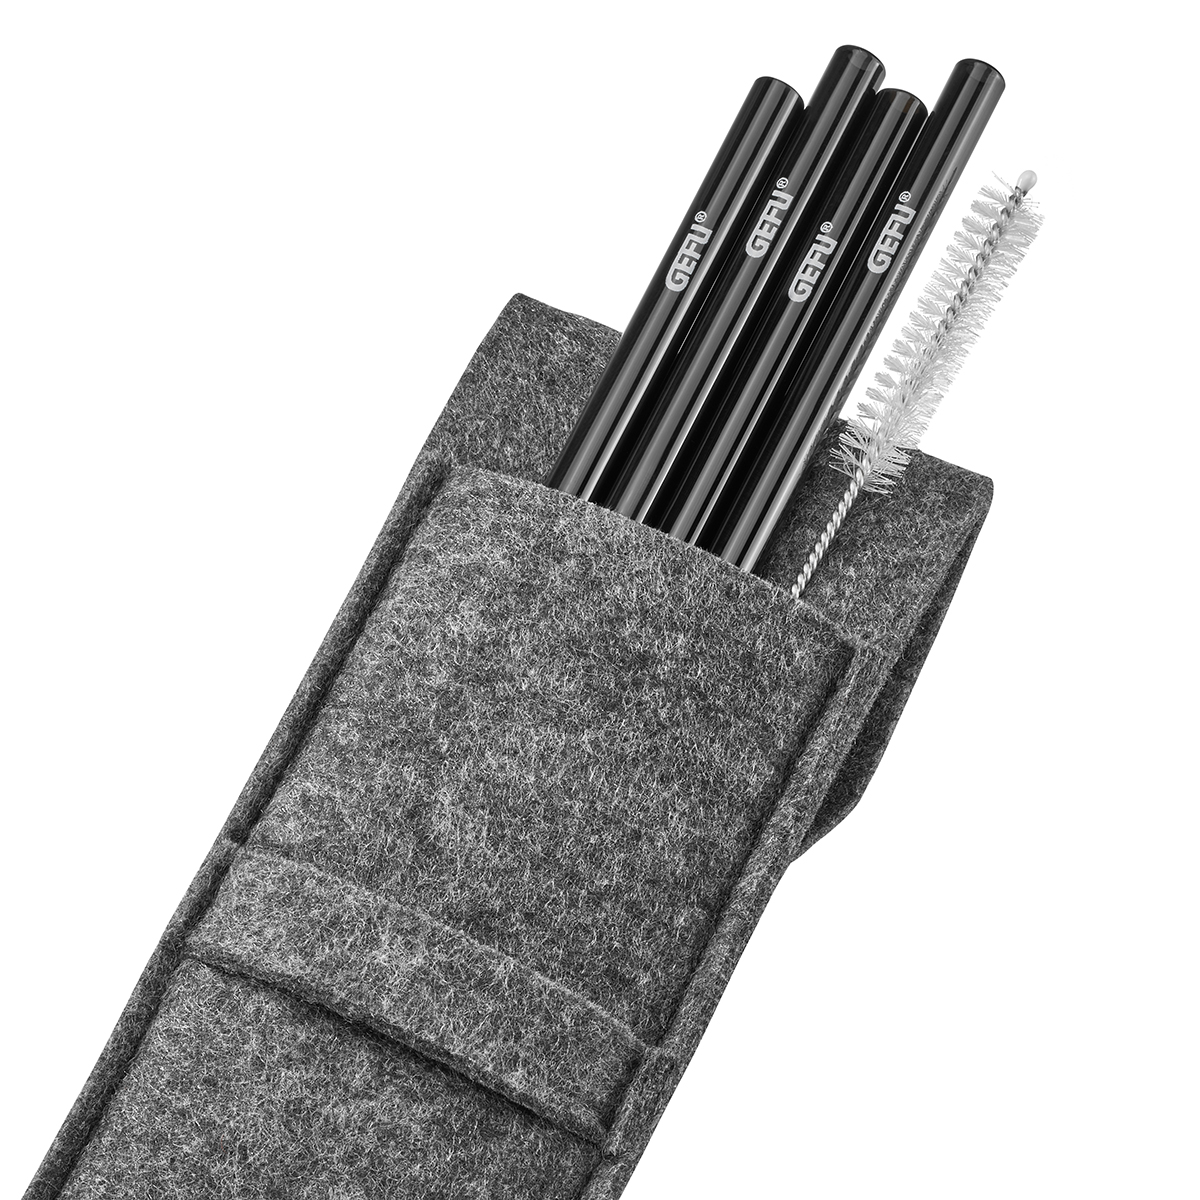 Glass straw FUTURE, black 18 cm, 4 pcs. in felt pouch